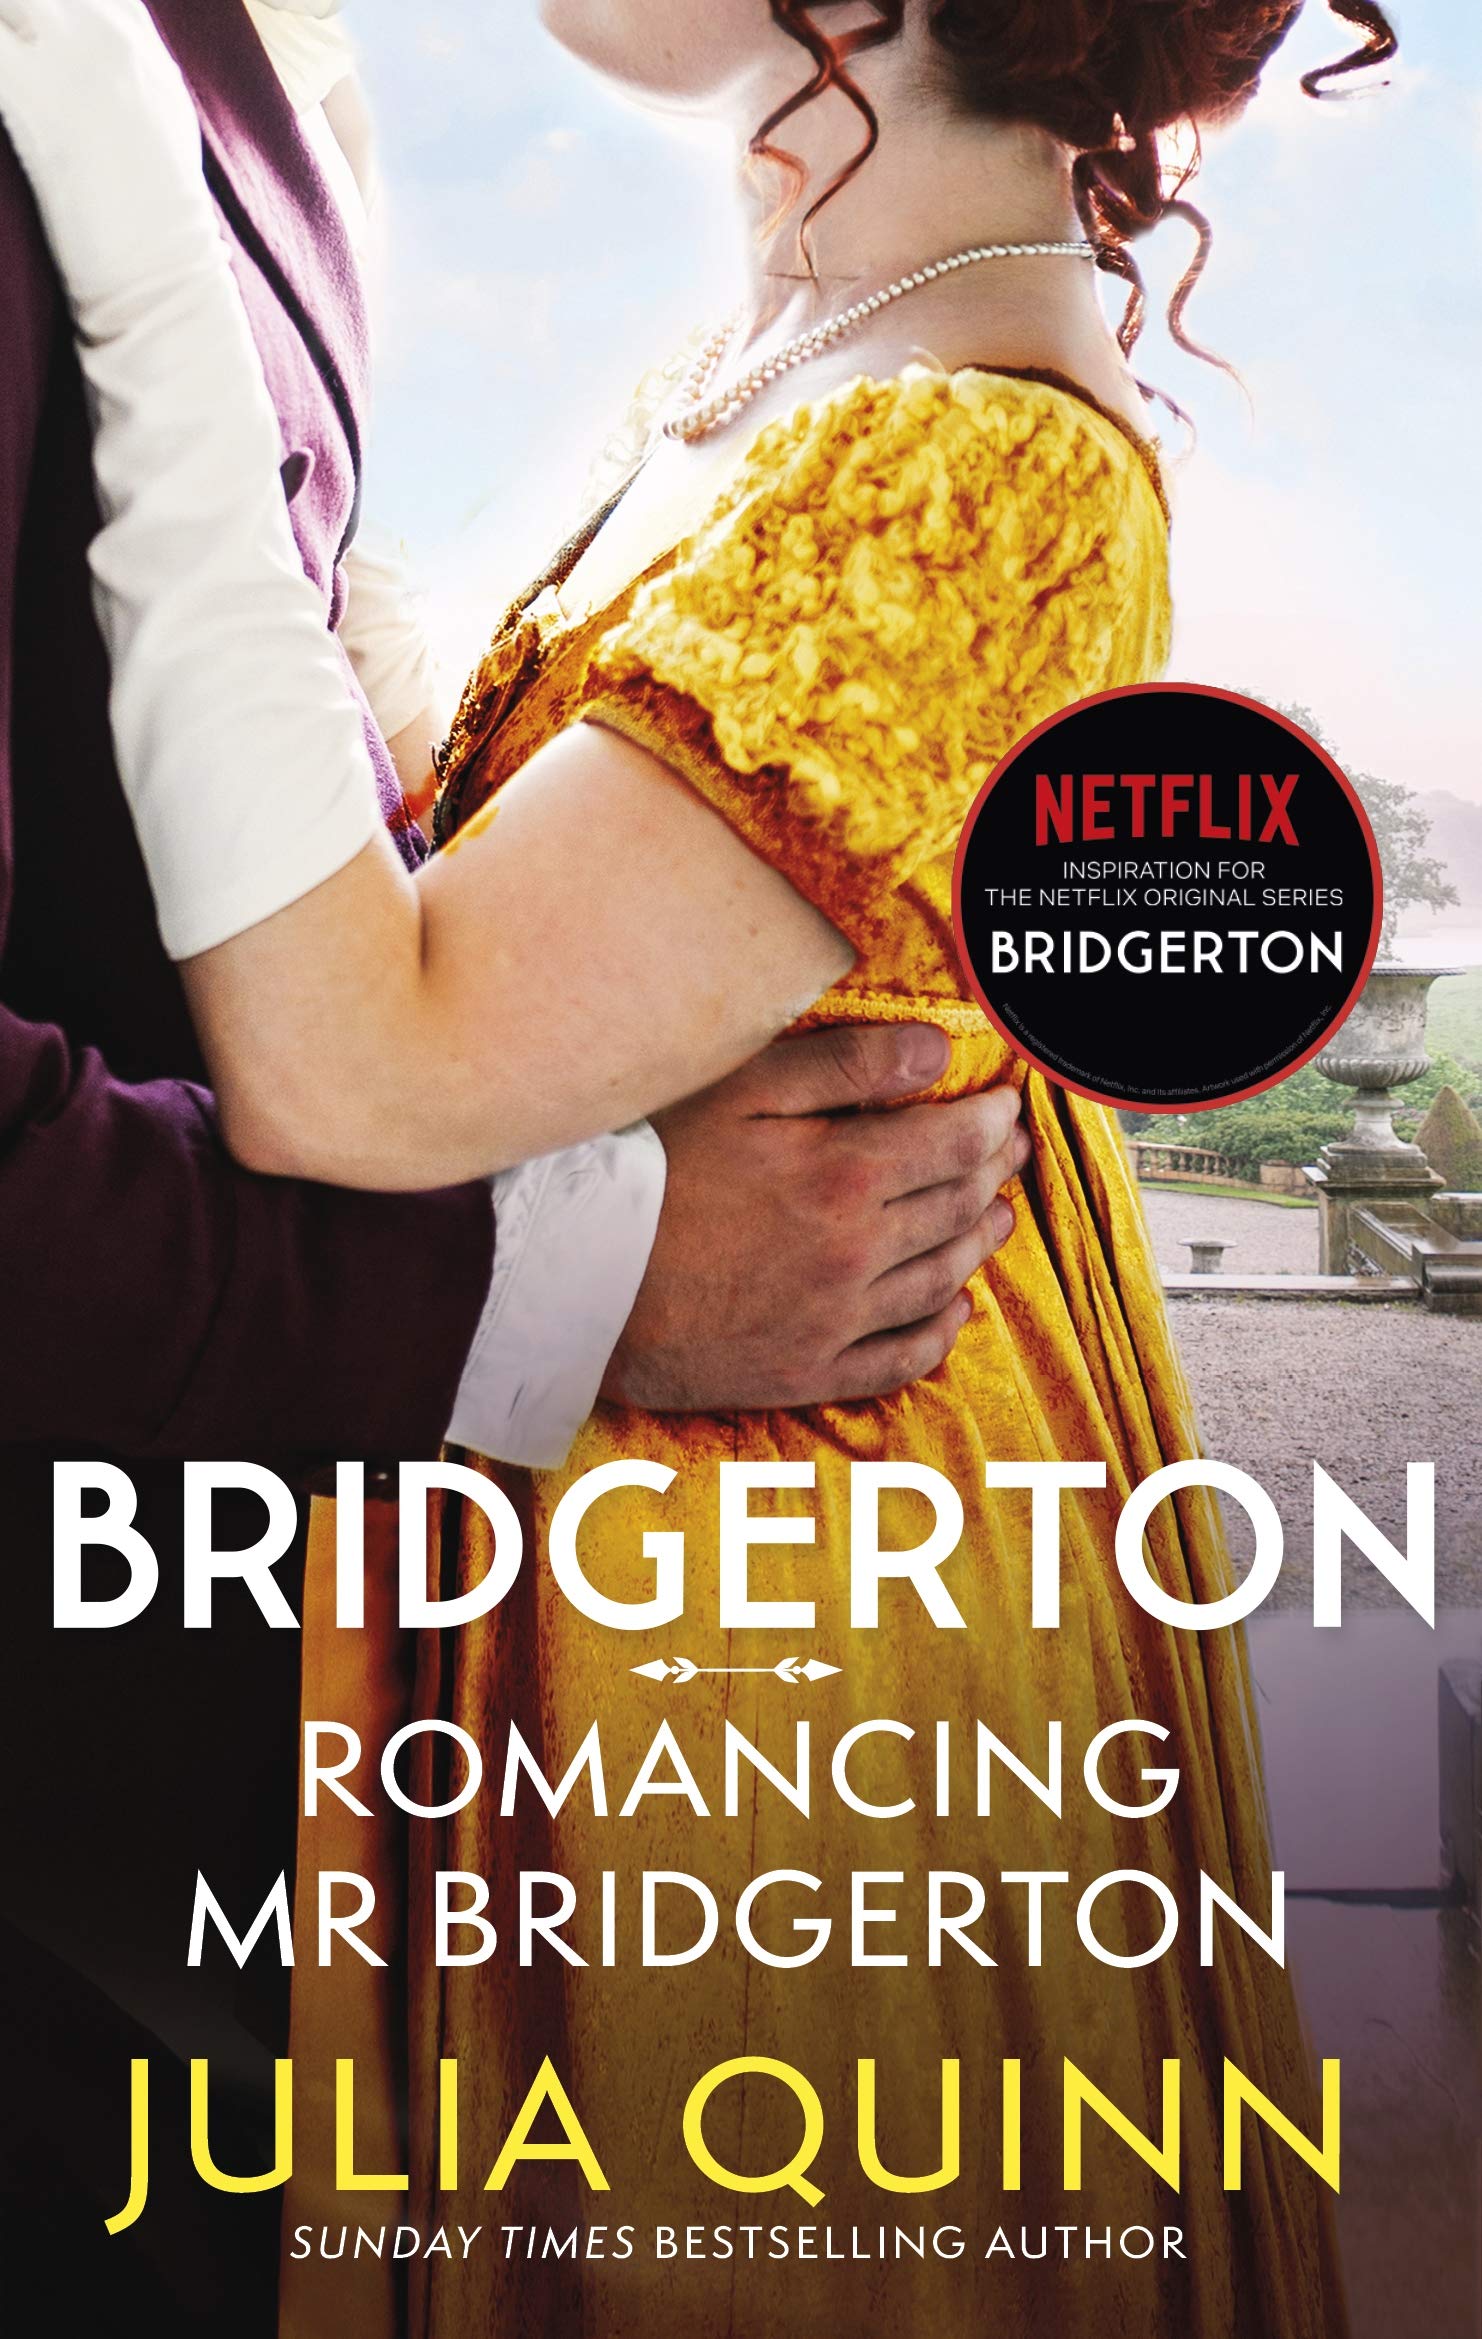 Image for "Romancing Mister Bridgerton"